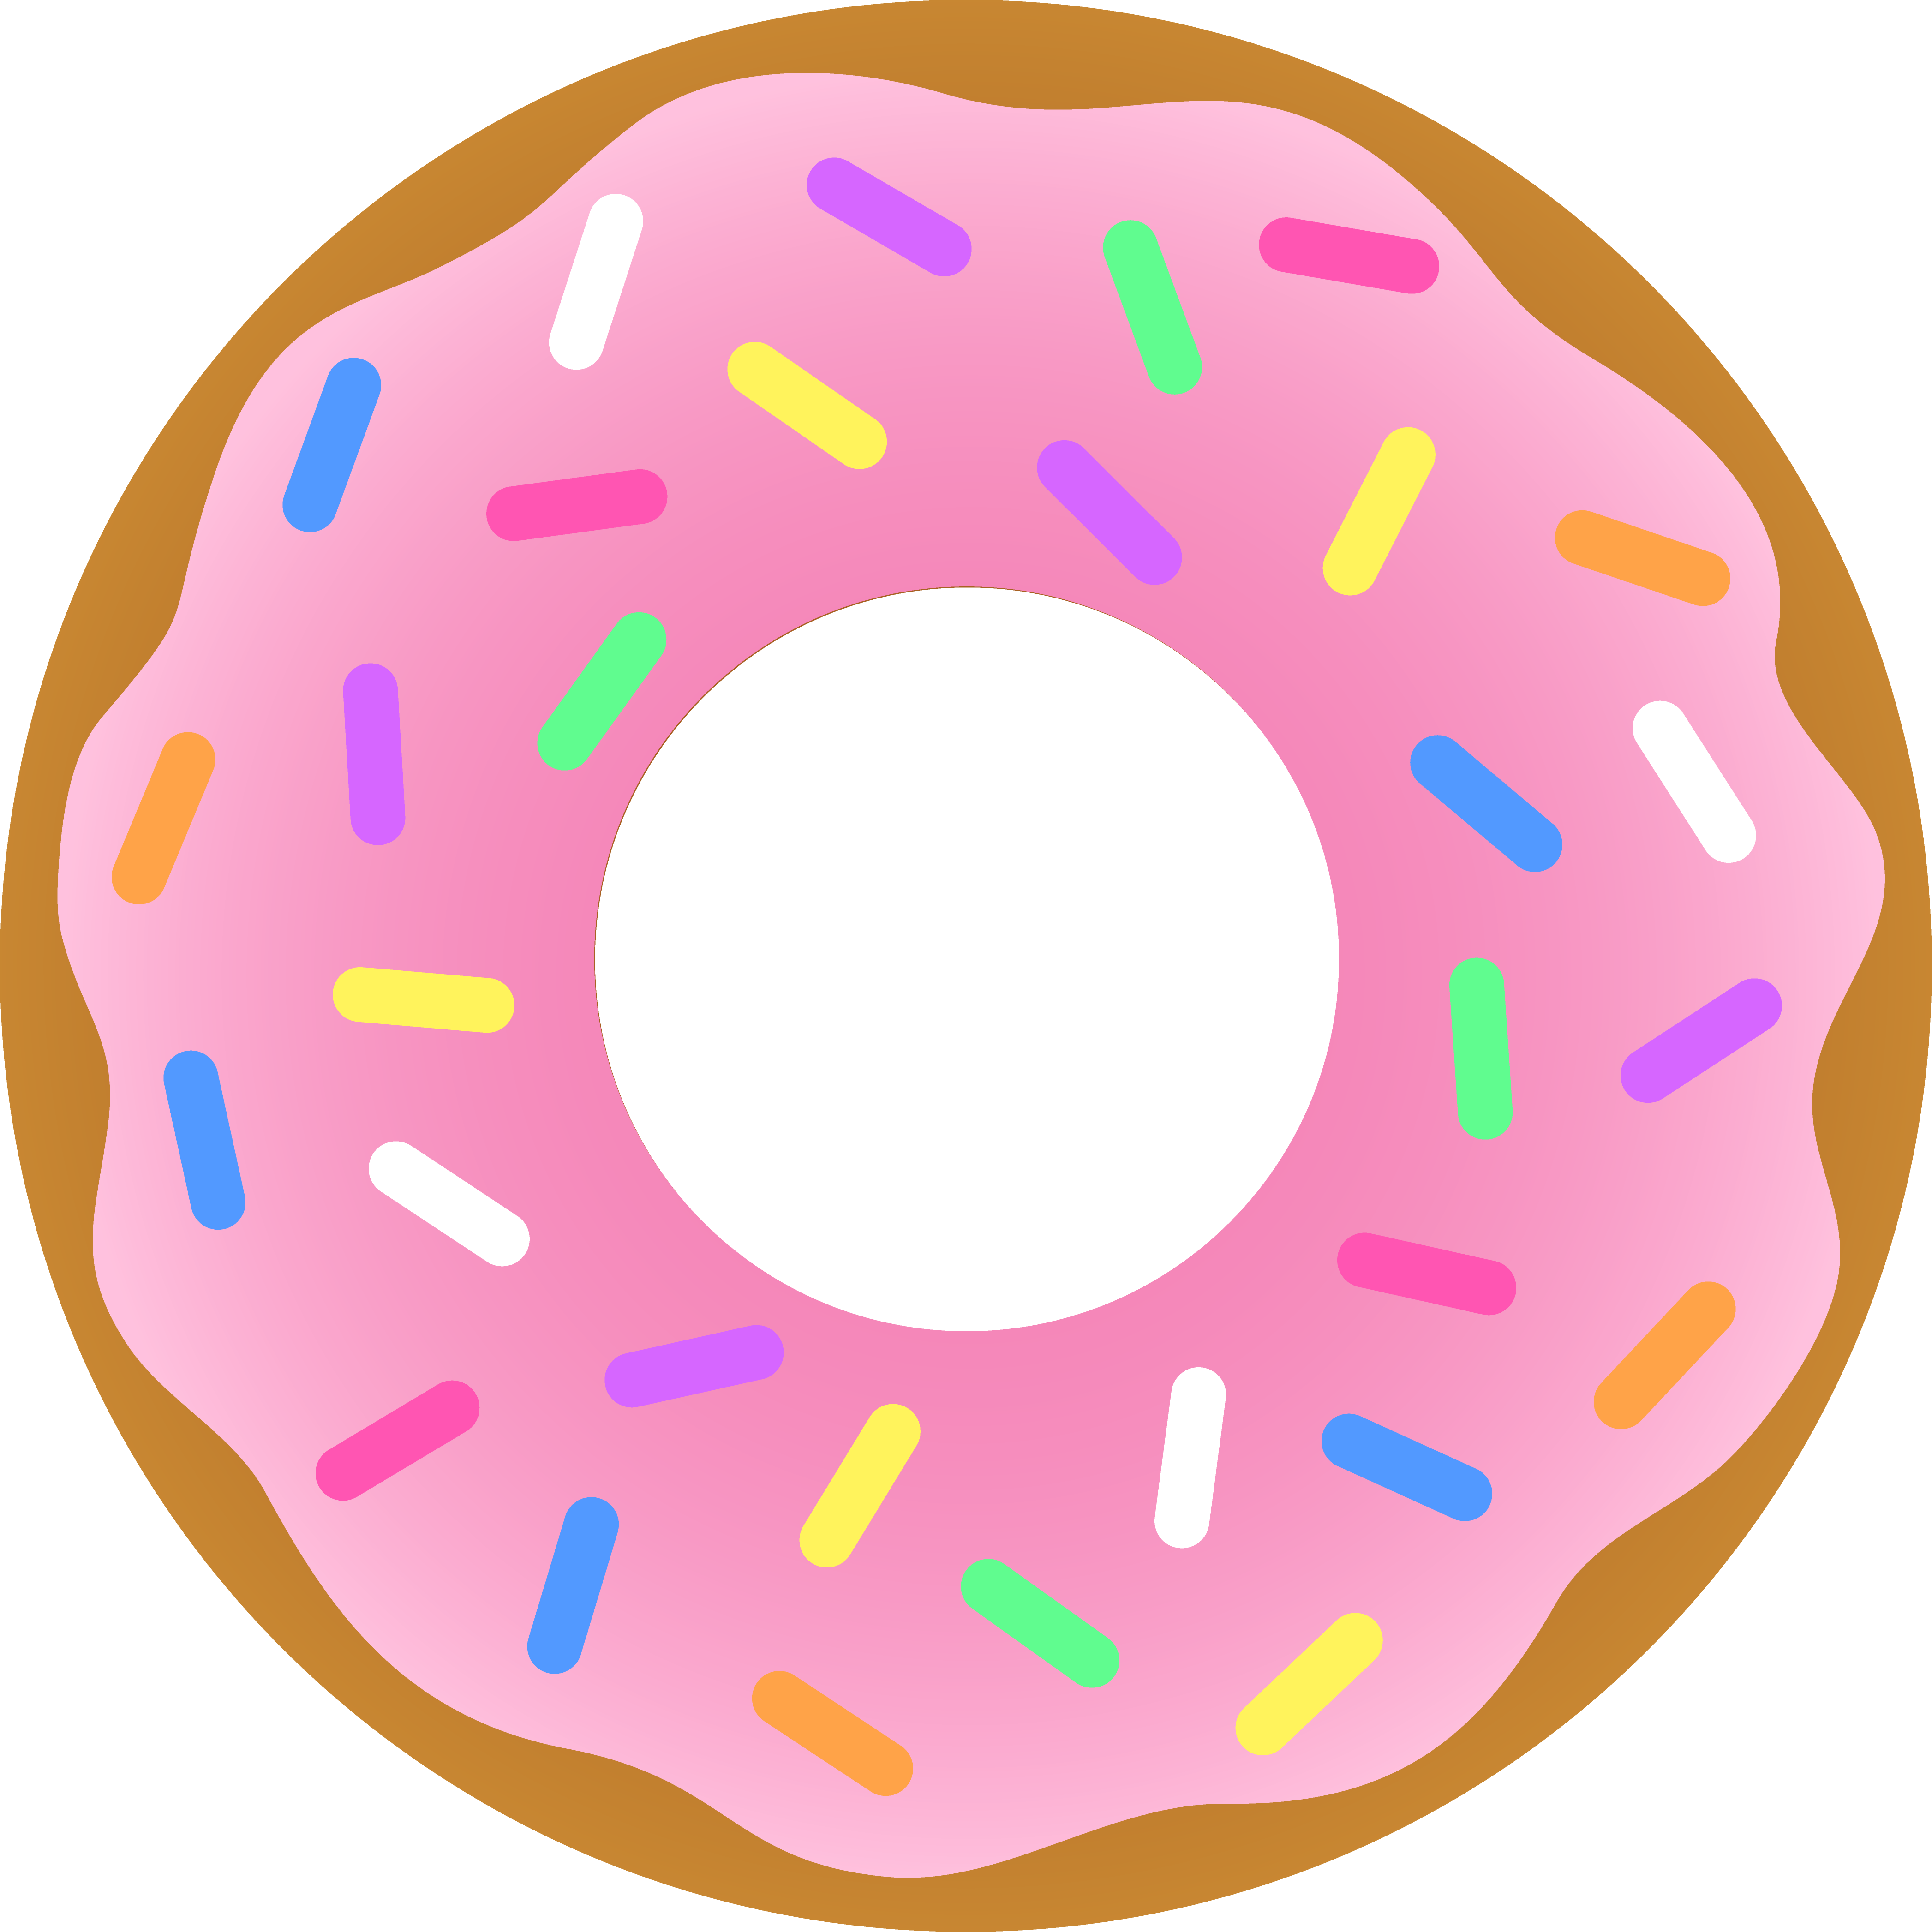 donut emoji copy and paste